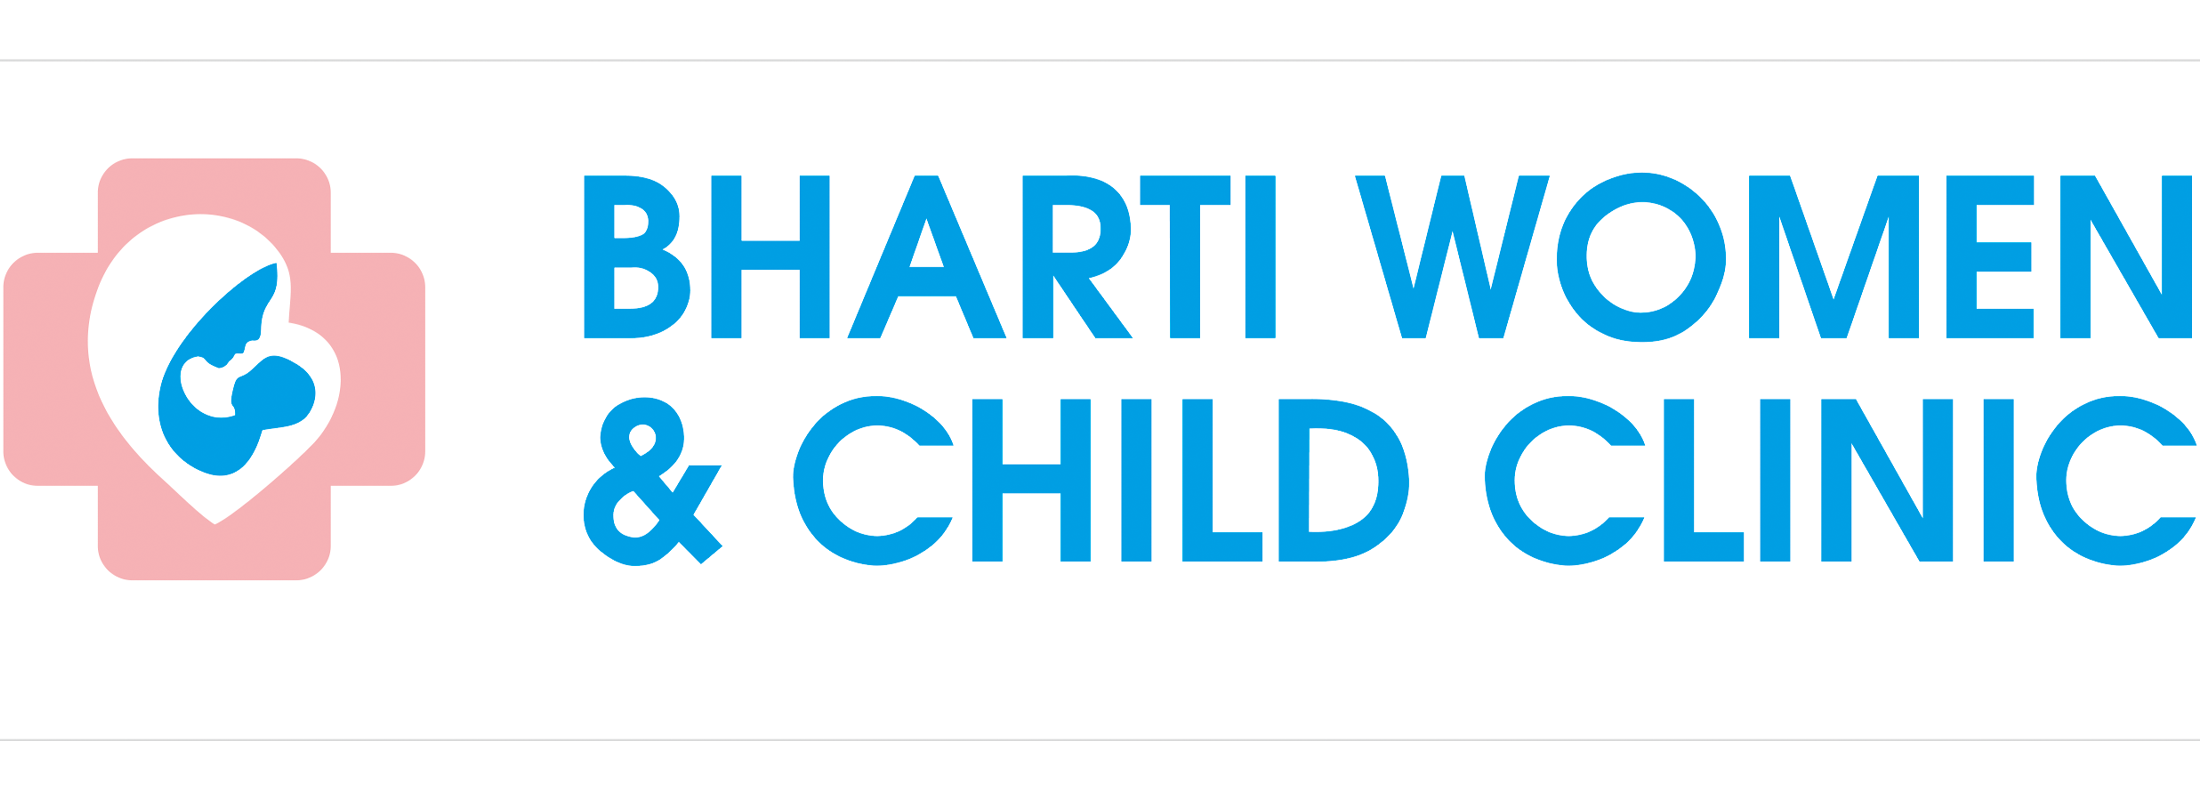 Bharti Women and Child Clinic